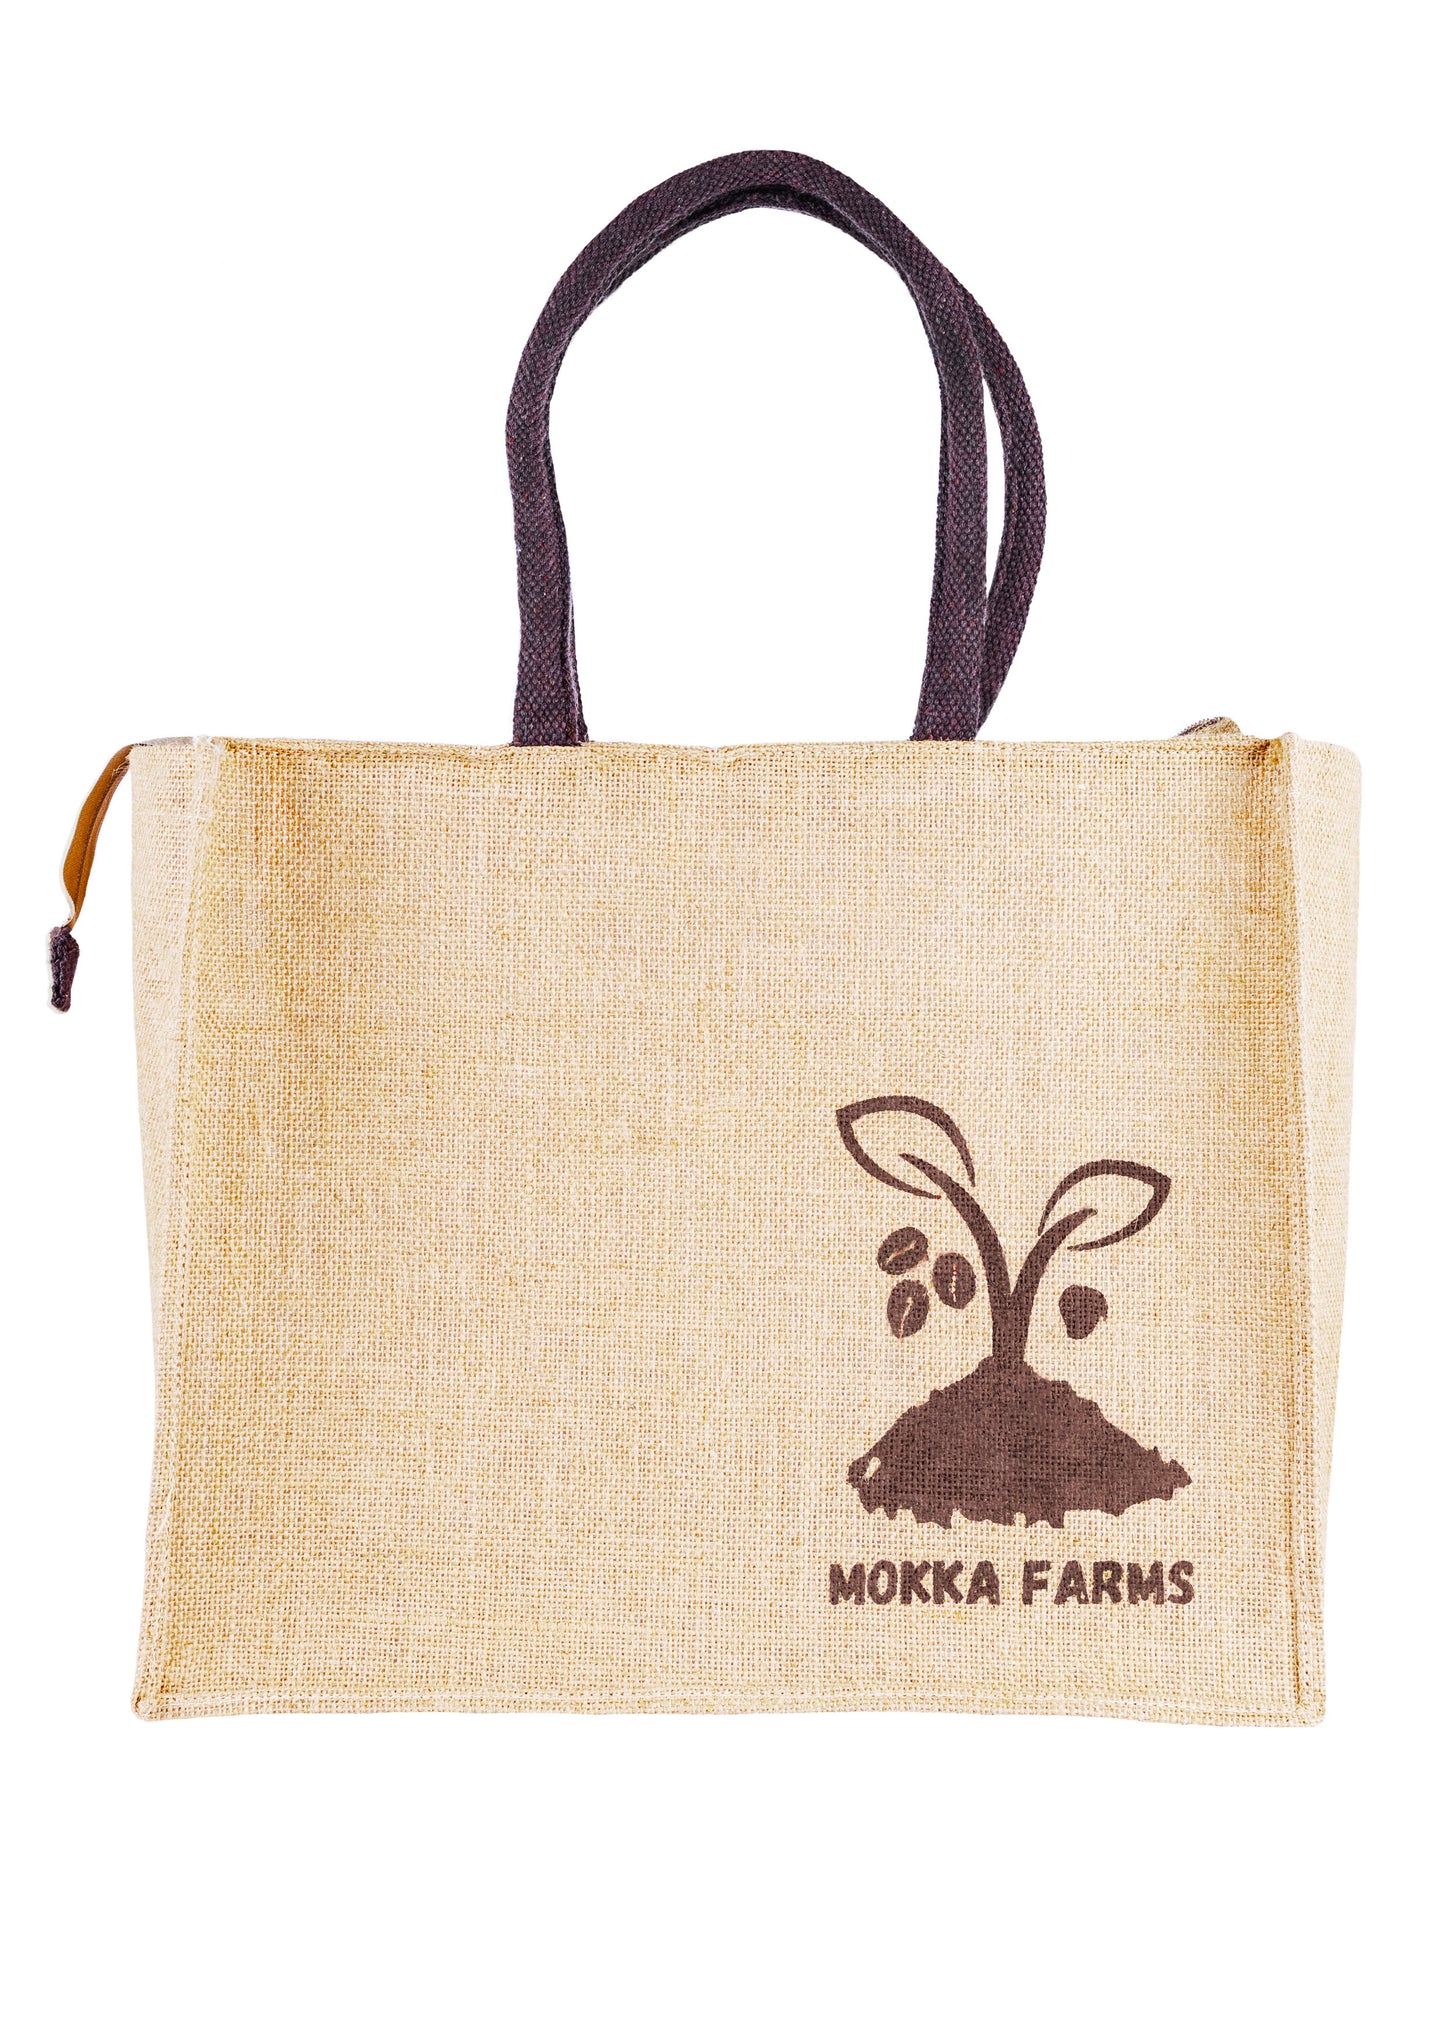 MokkaFarms Carry All Bag, with Zipper - 100% Jute [15in x 12.5in x 7.5in]